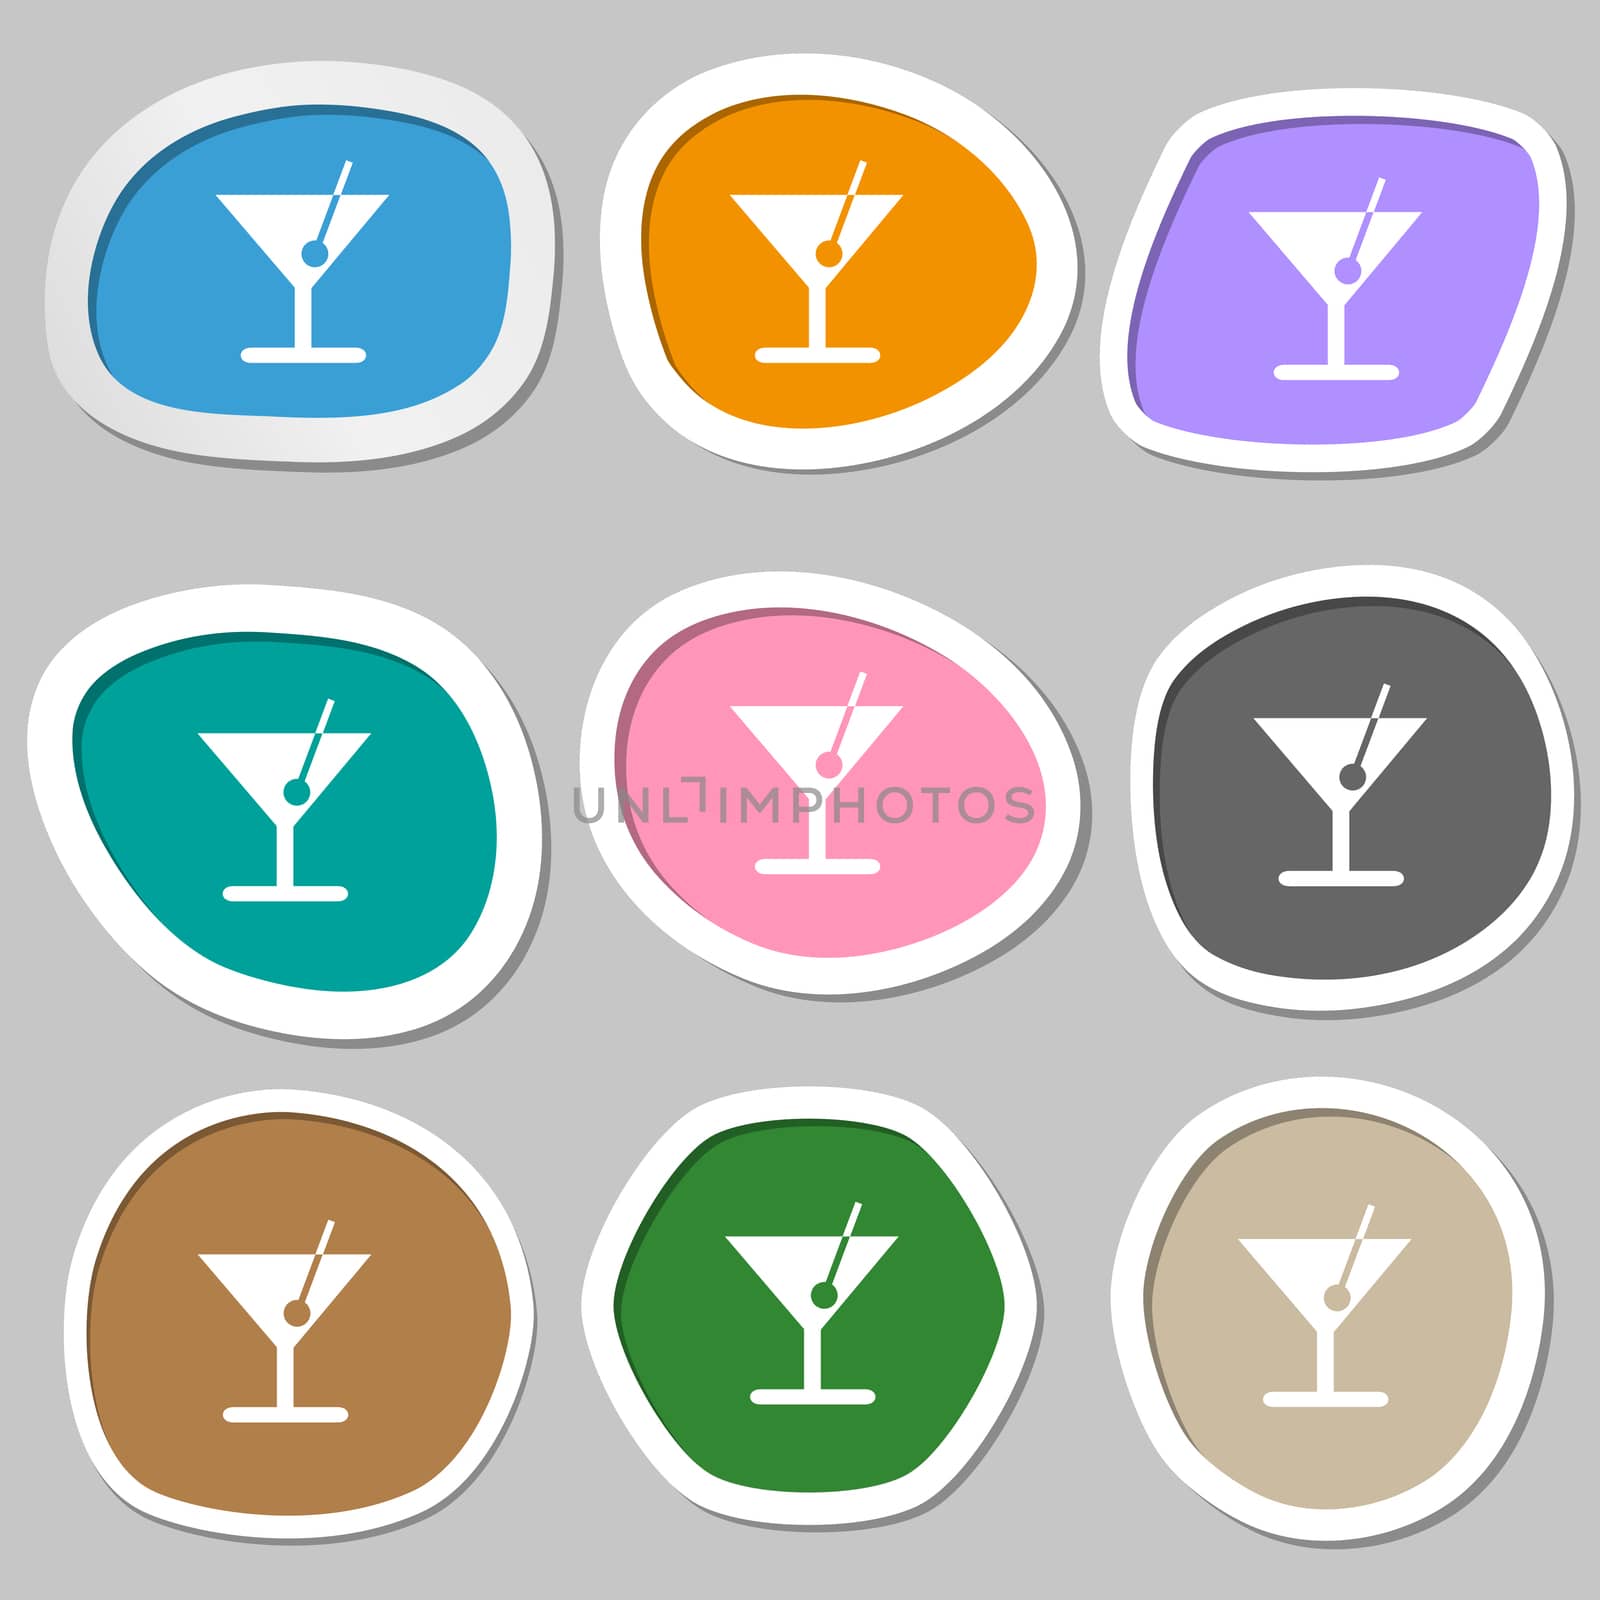 cocktail icon symbols. Multicolored paper stickers. illustration